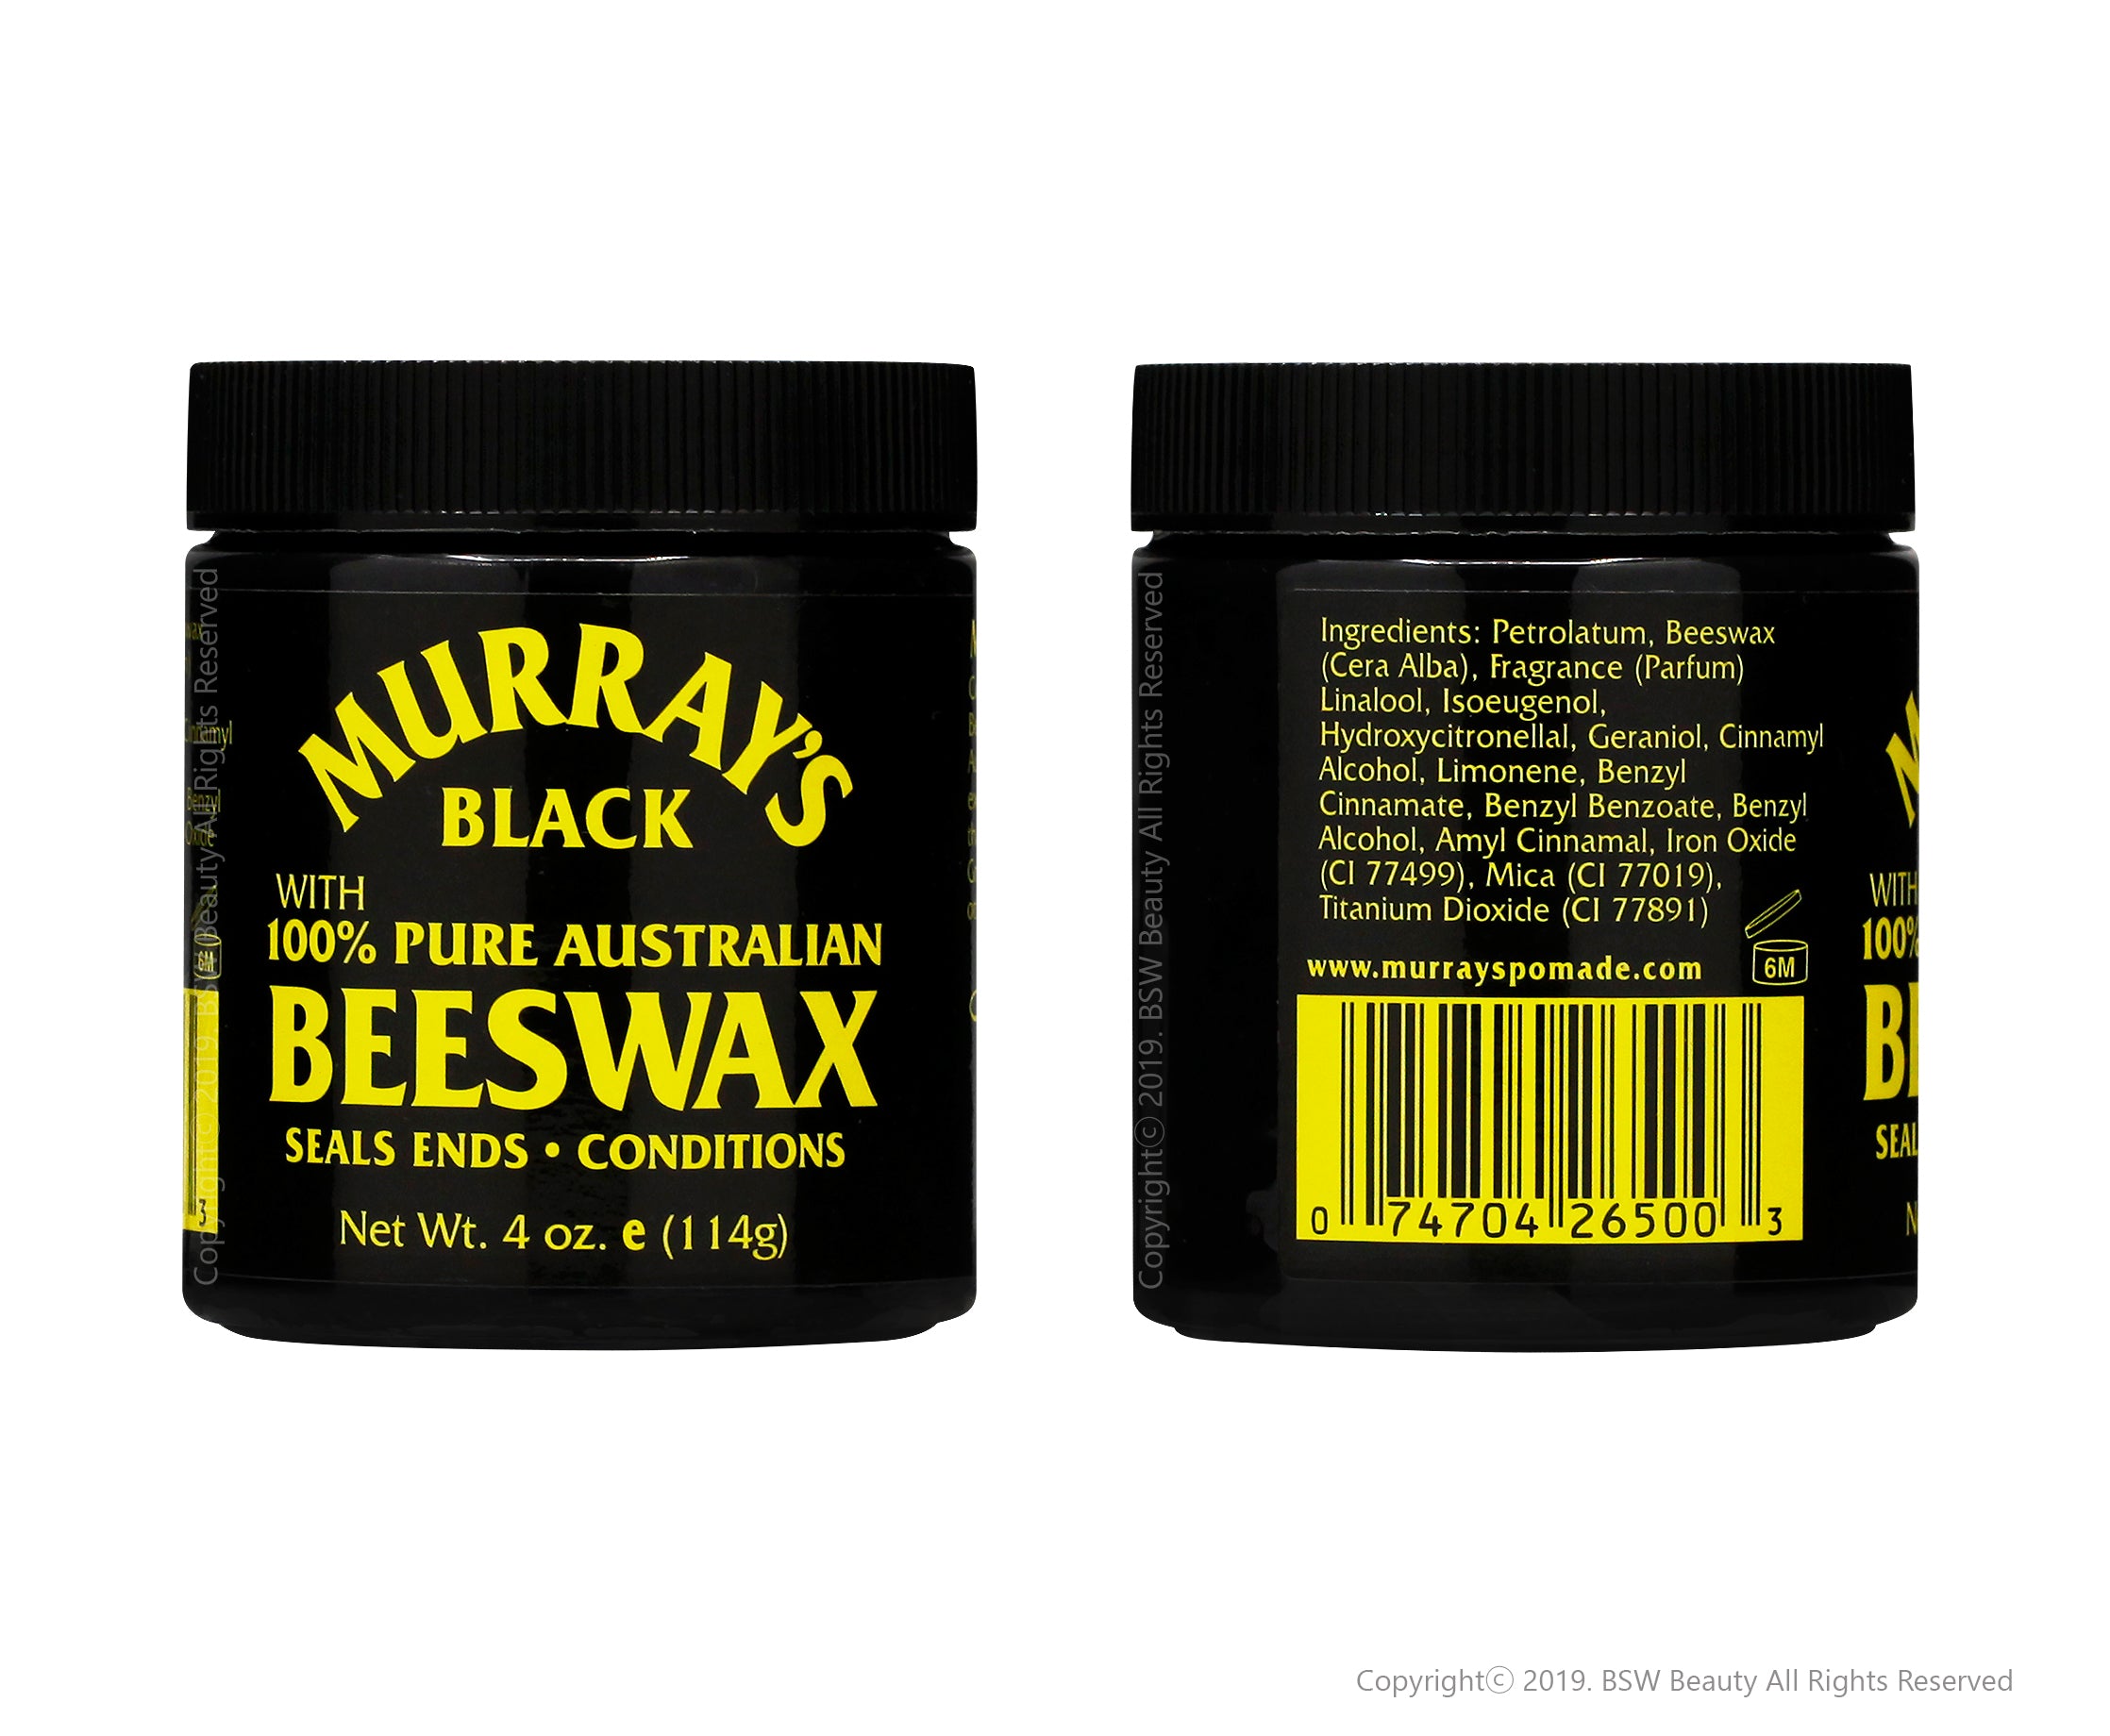 Murray's Black 100% Pure Australian Beeswax Seals Ends